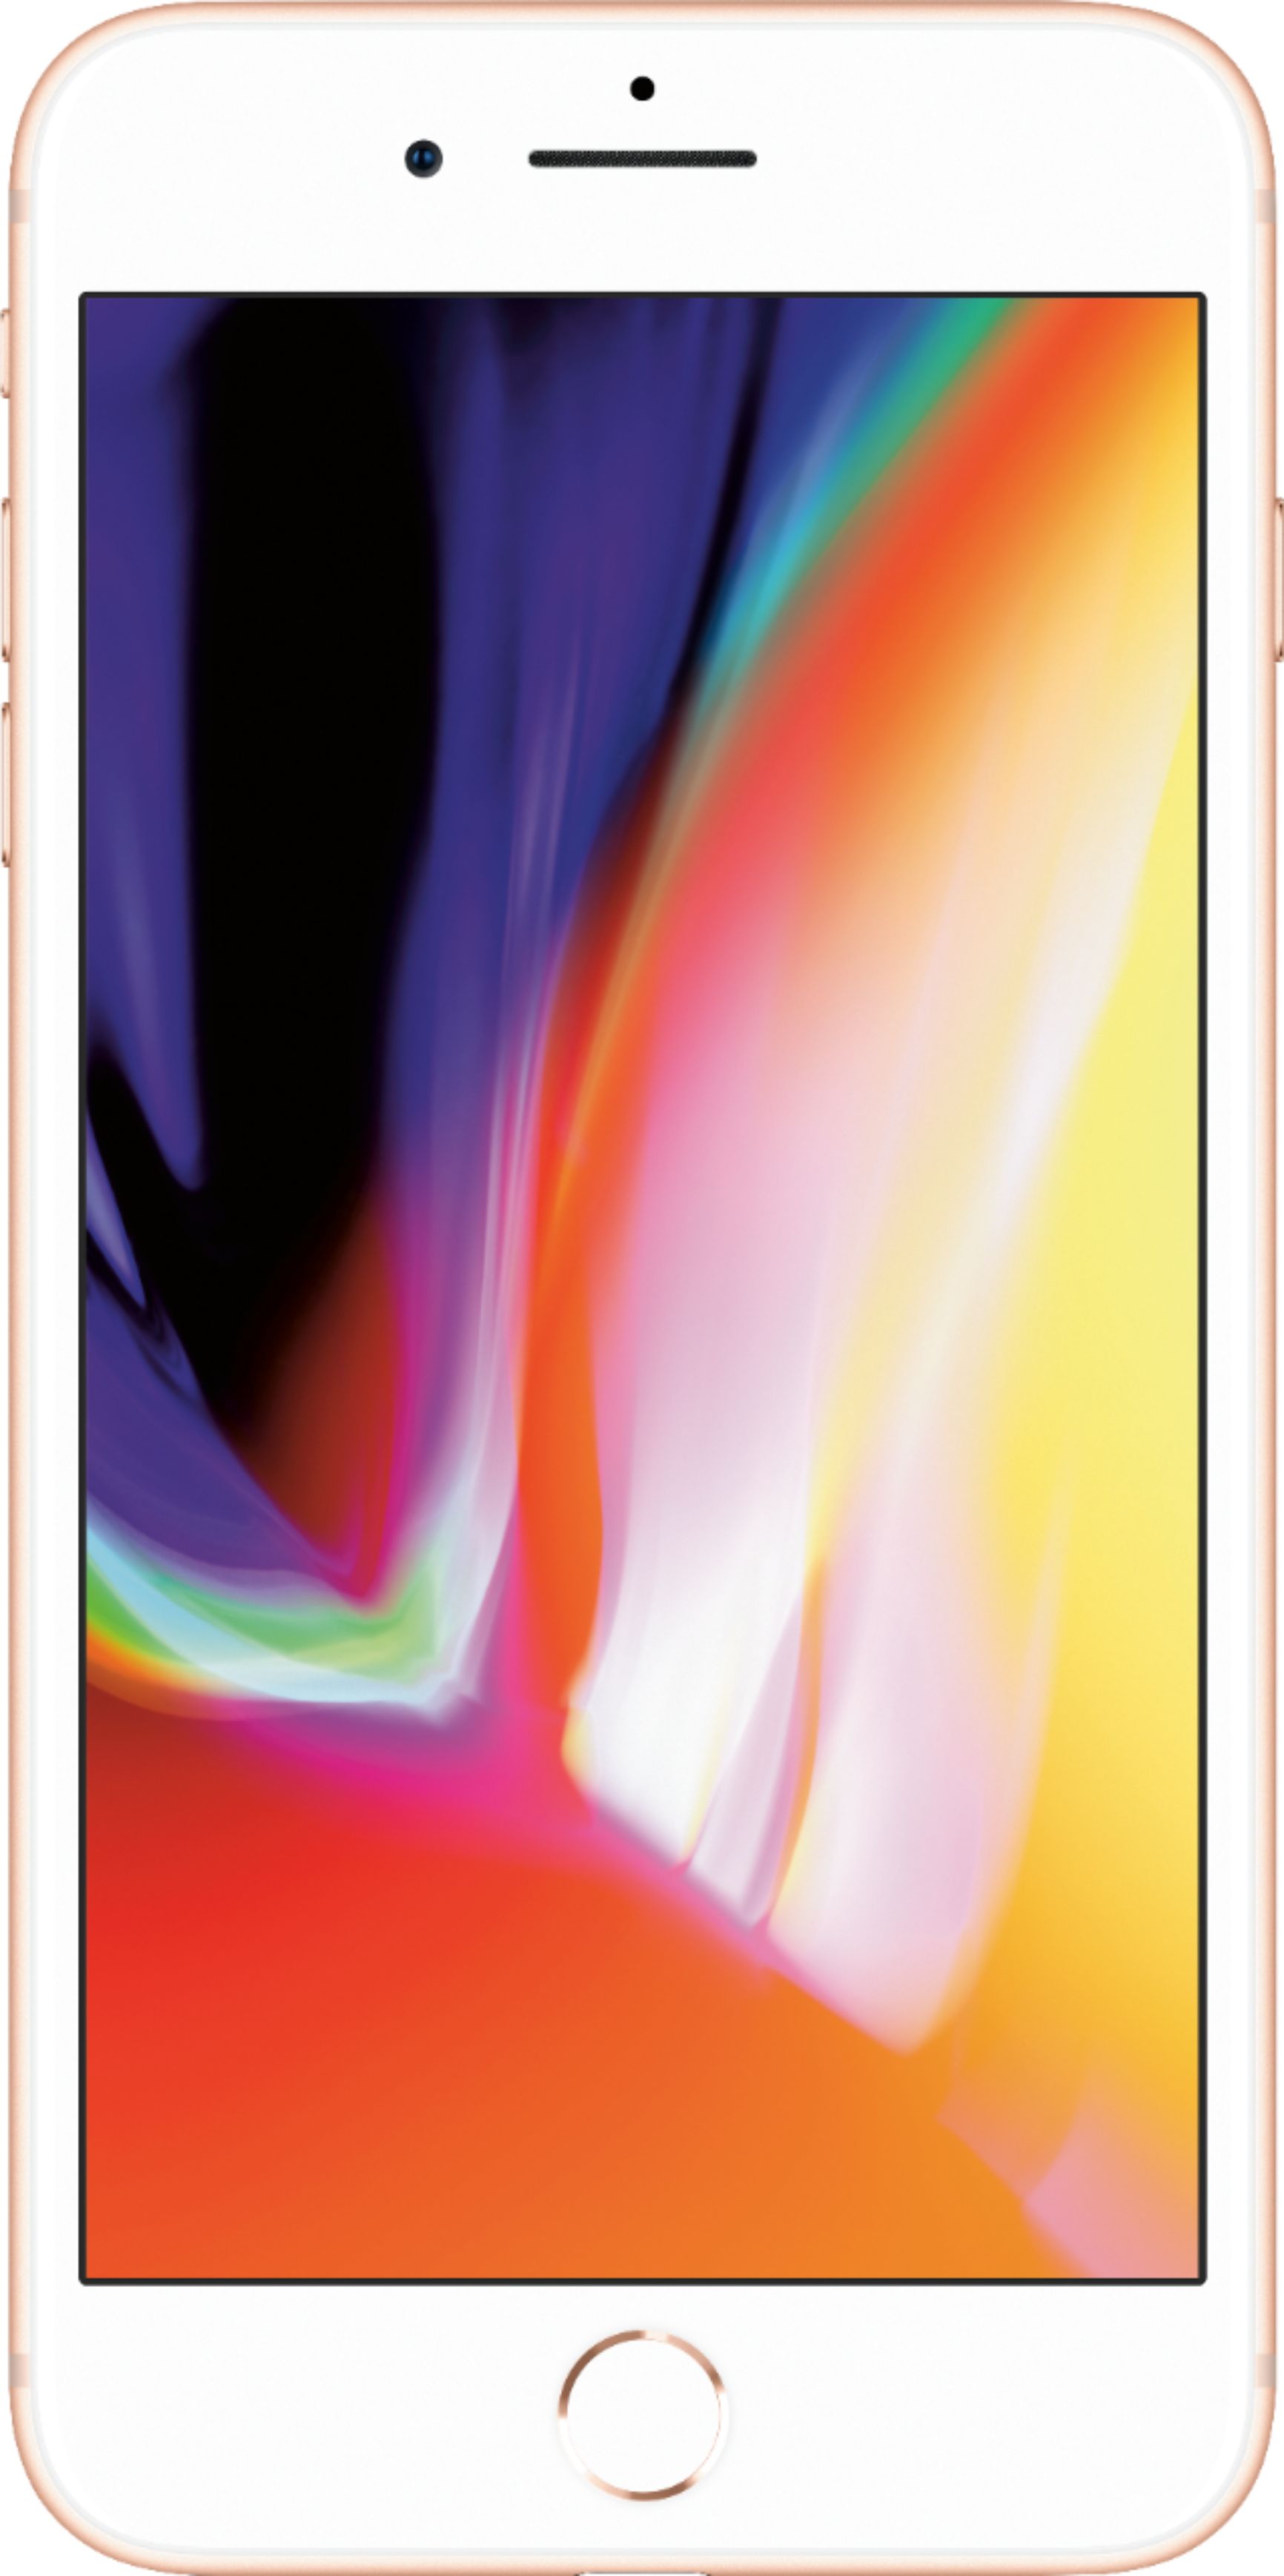 Apple - iPhone 8 Plus 64GB - Gold (AT&T)